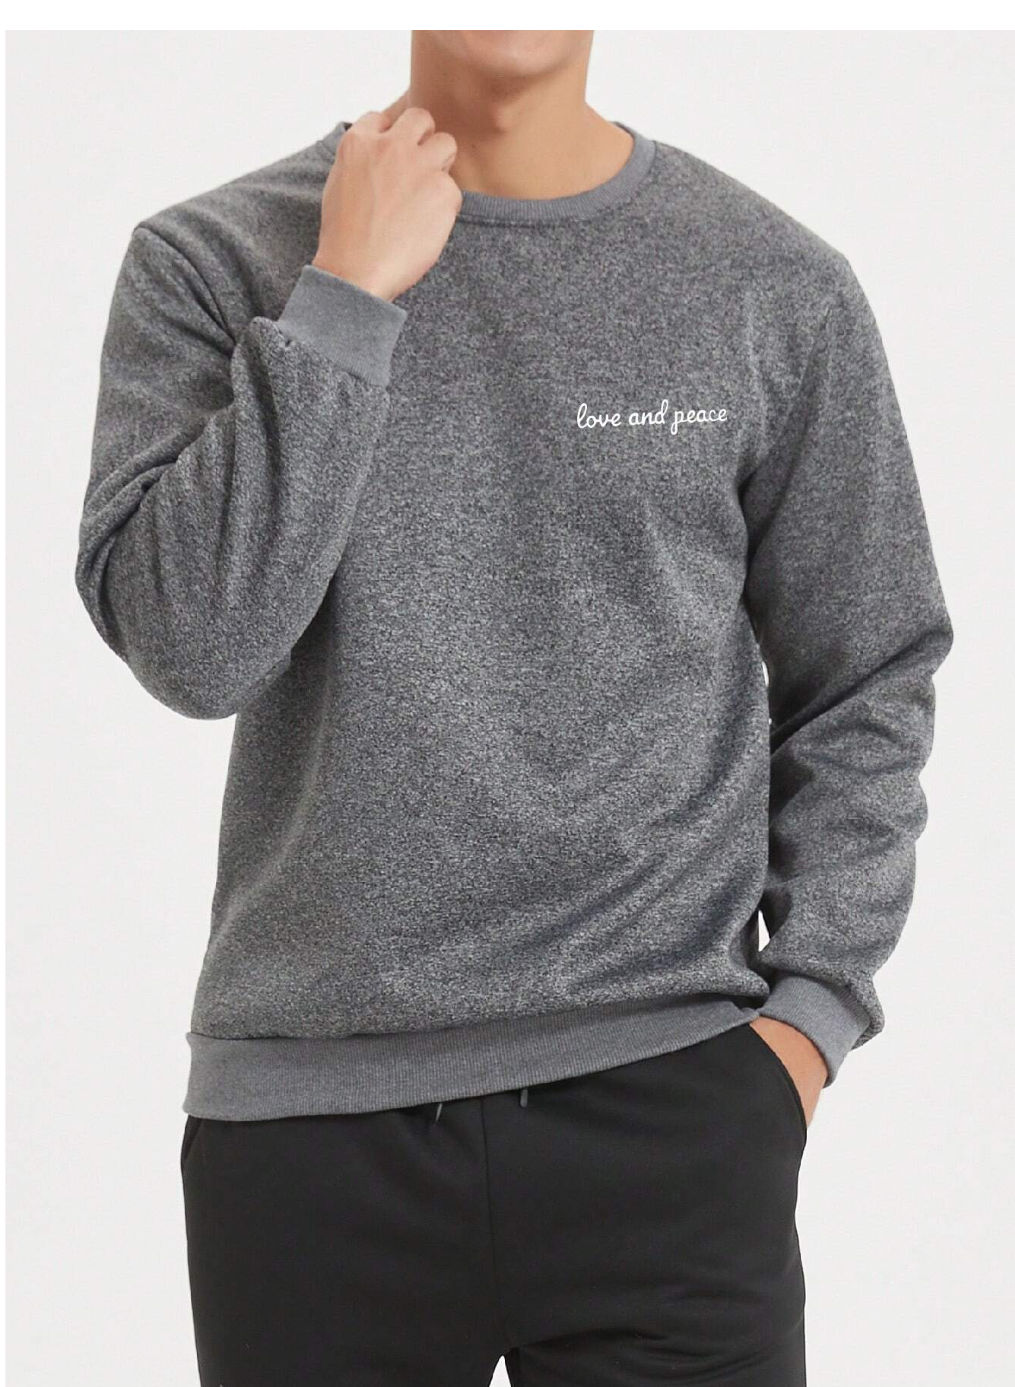 Infinity Style: Manfinity Hypemode Men's Fleece Letter Printed Sweatshirt